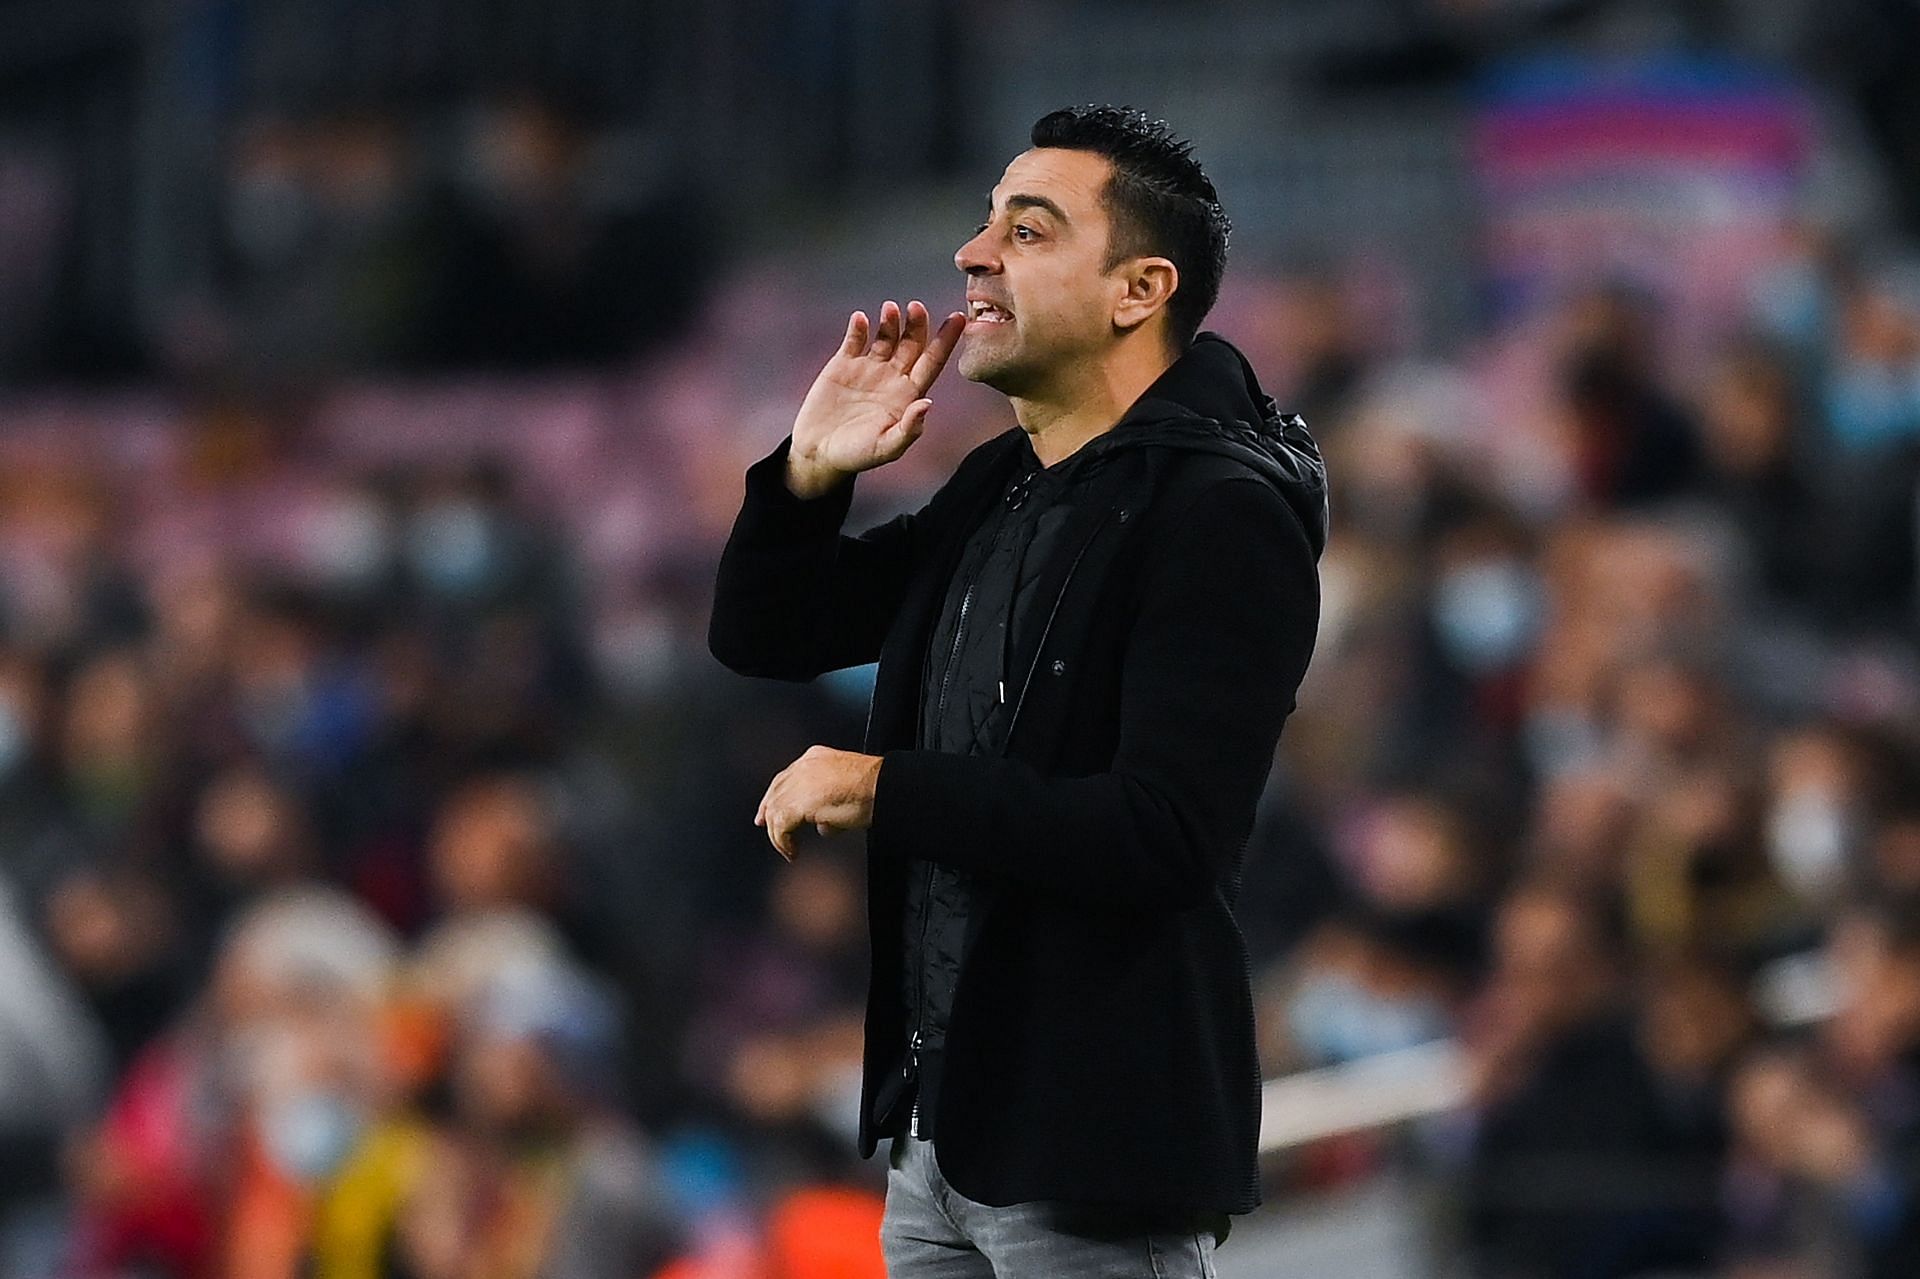 Barcelona have looked better under new boss Xavi Hernandez.